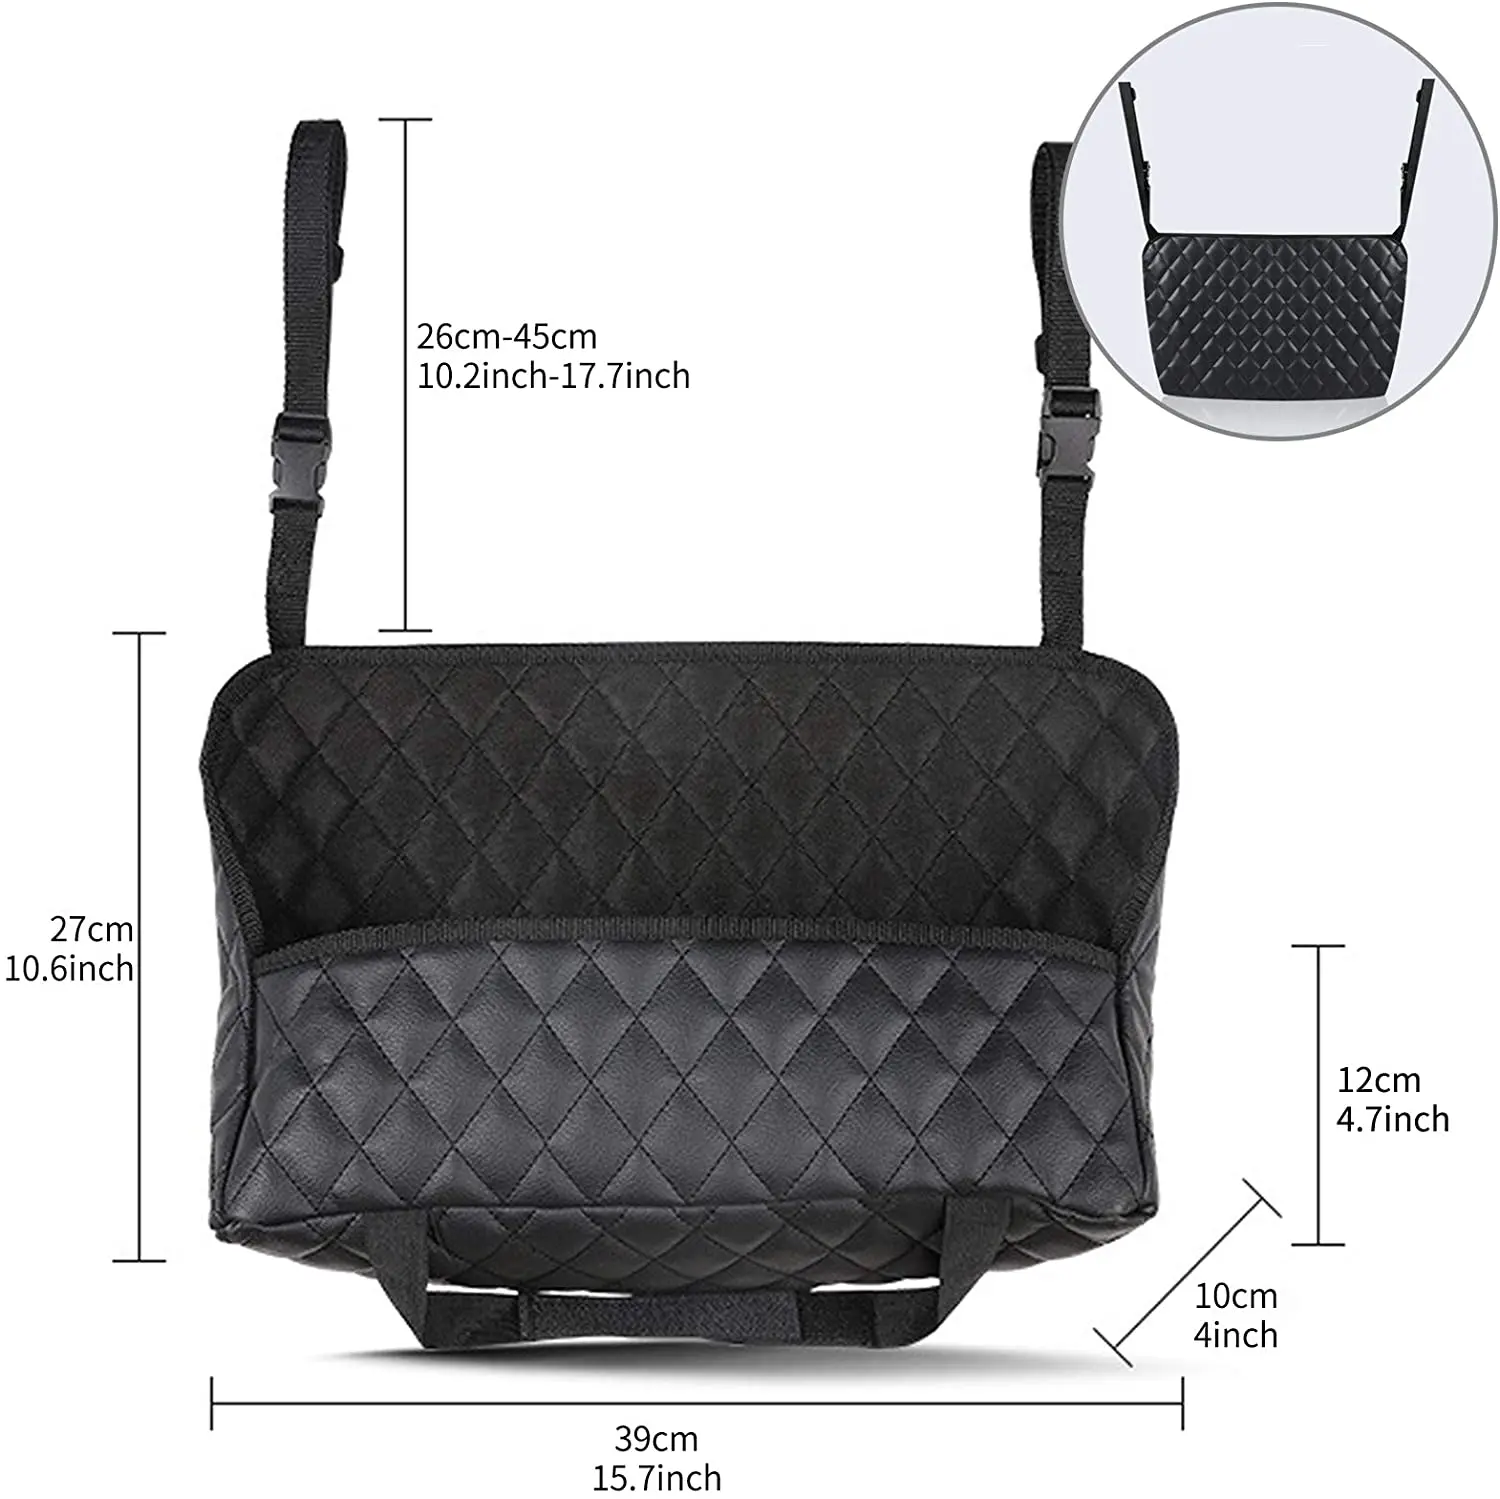 HUALONG Car Handbag Holder Leather Seat Back Organizer Mesh Large Capacity Bag Handbag Holding Net Purse Storage & Pocket Handbag Holder Between The Two Seats of The Car 